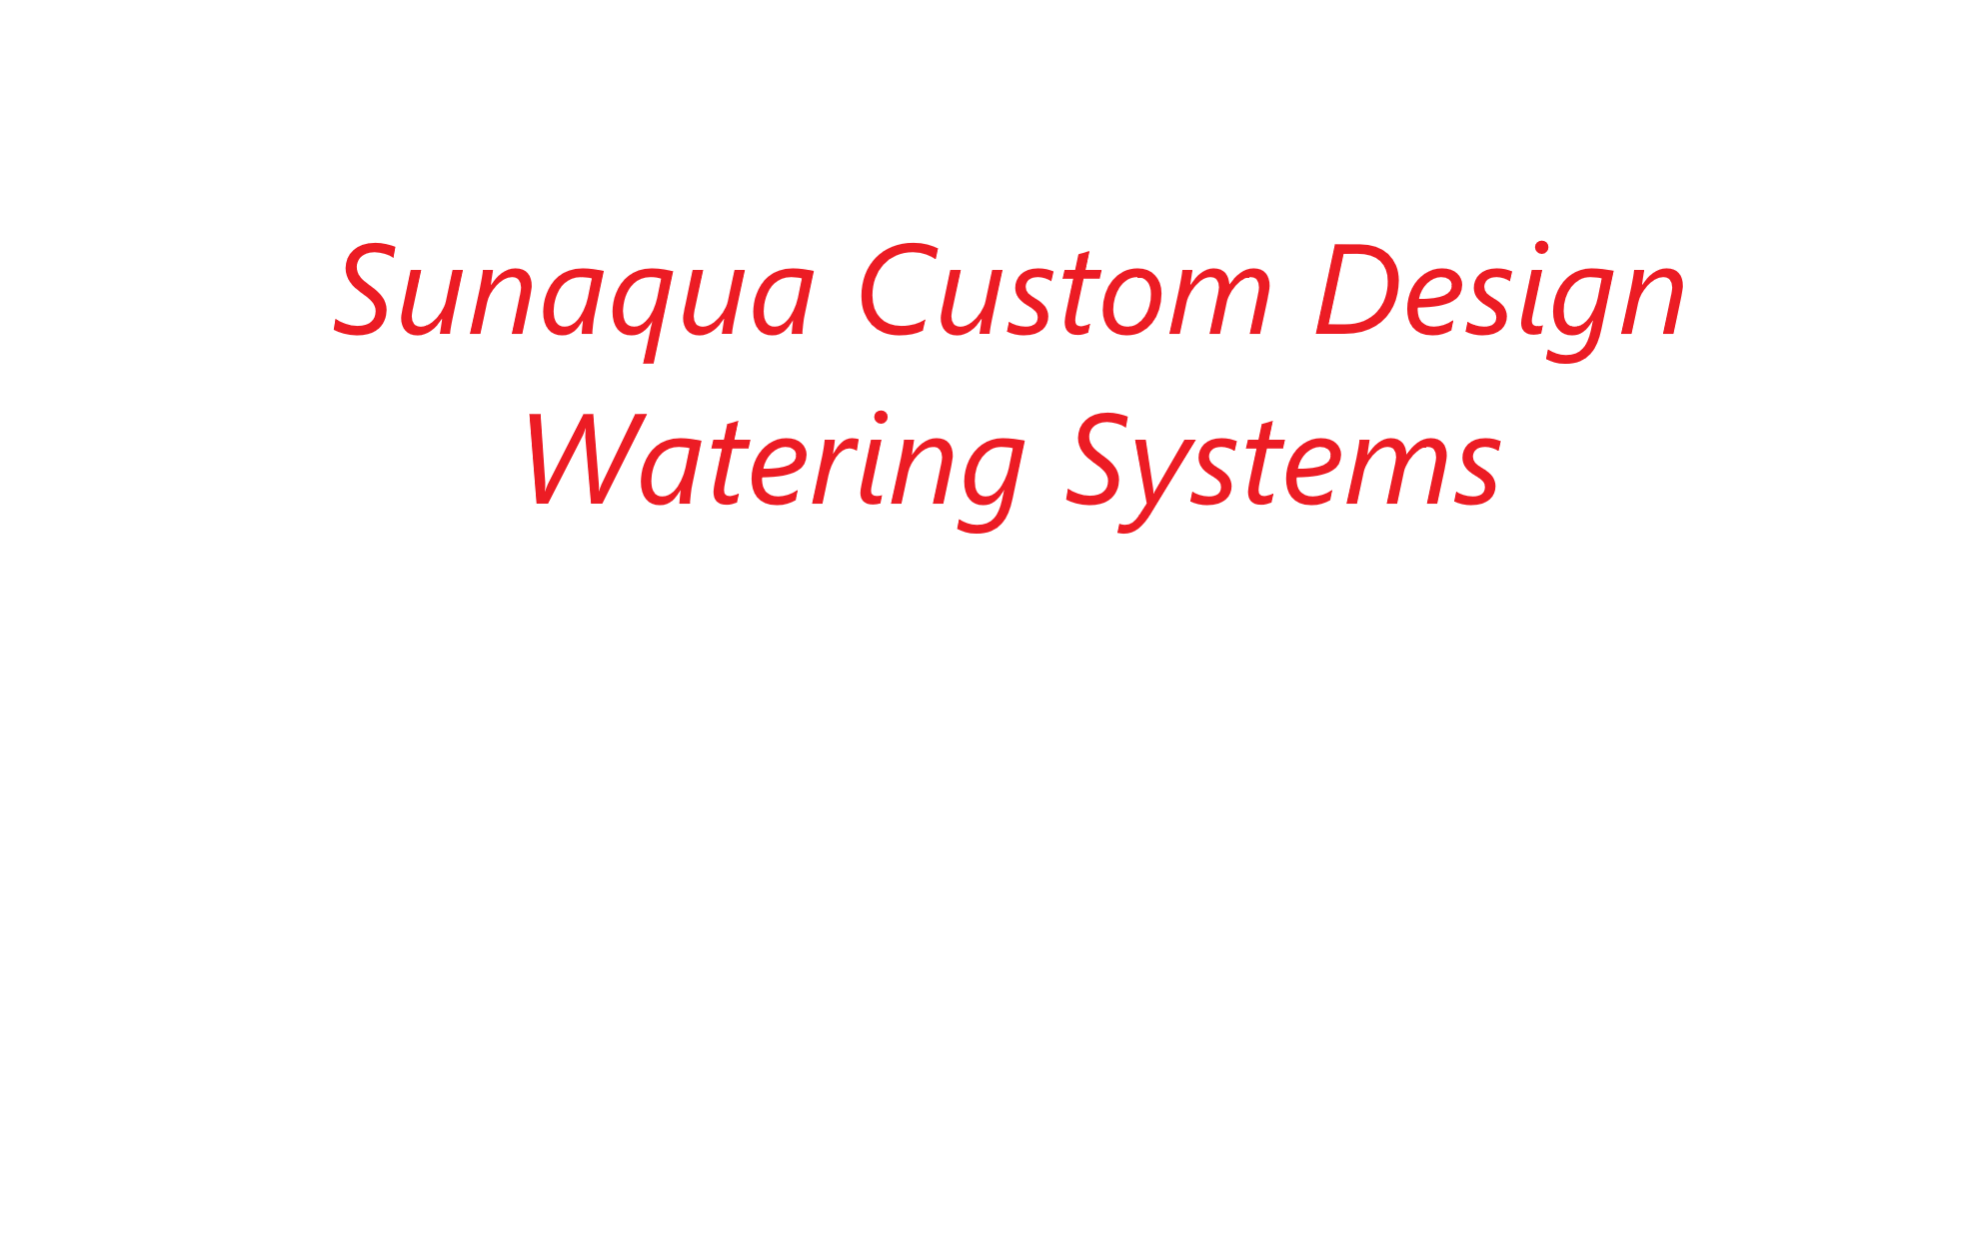 Sunaqua custom design